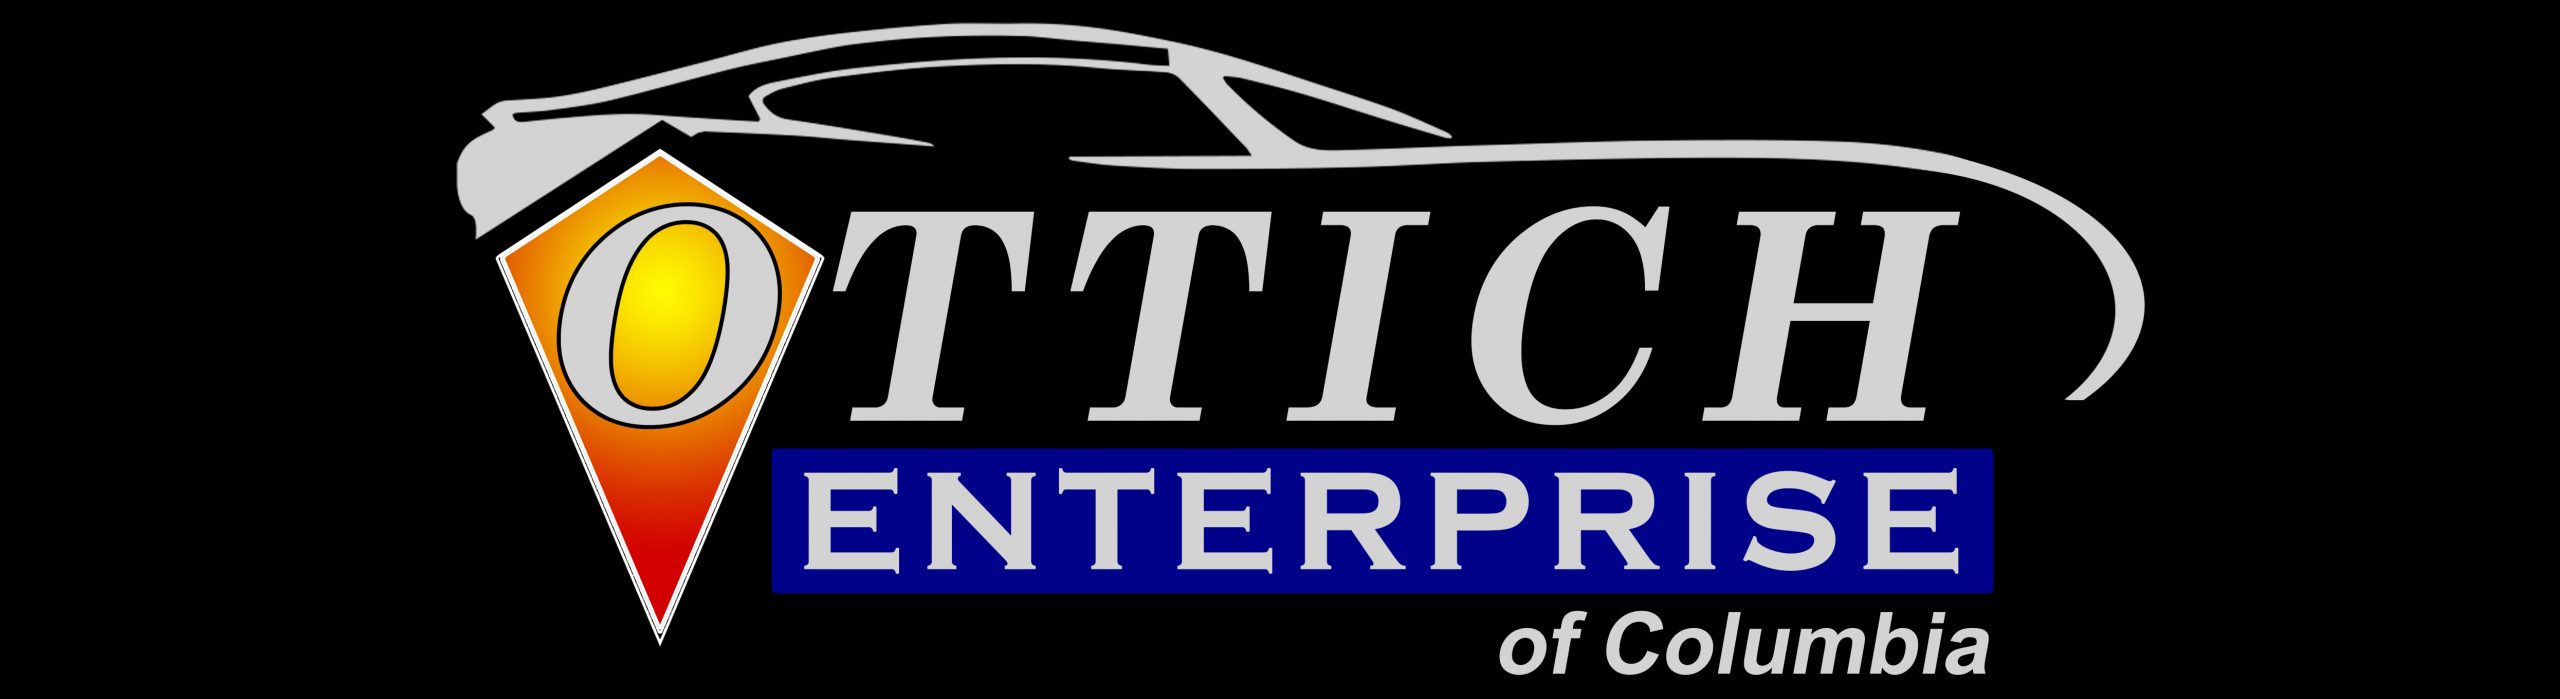 Ottich Enterprise LLC